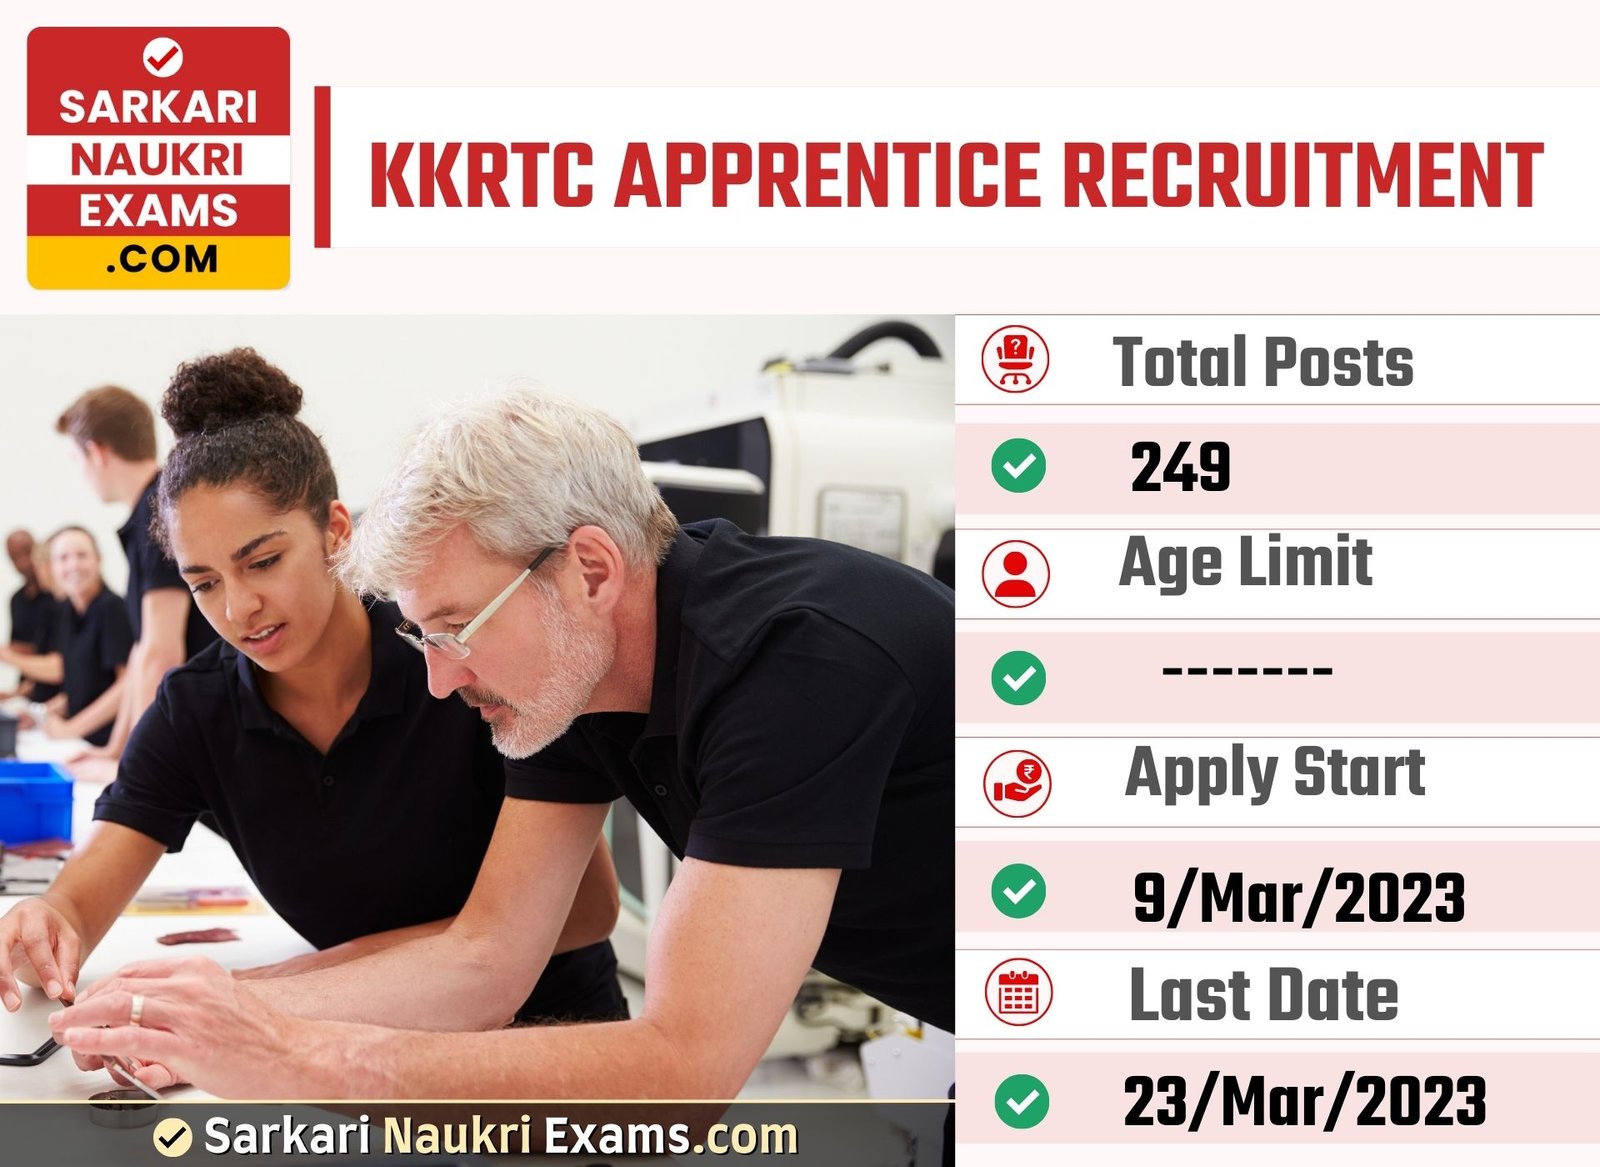 KKRTC Apprentice Recruitment Form 2023 | Interview Based Job